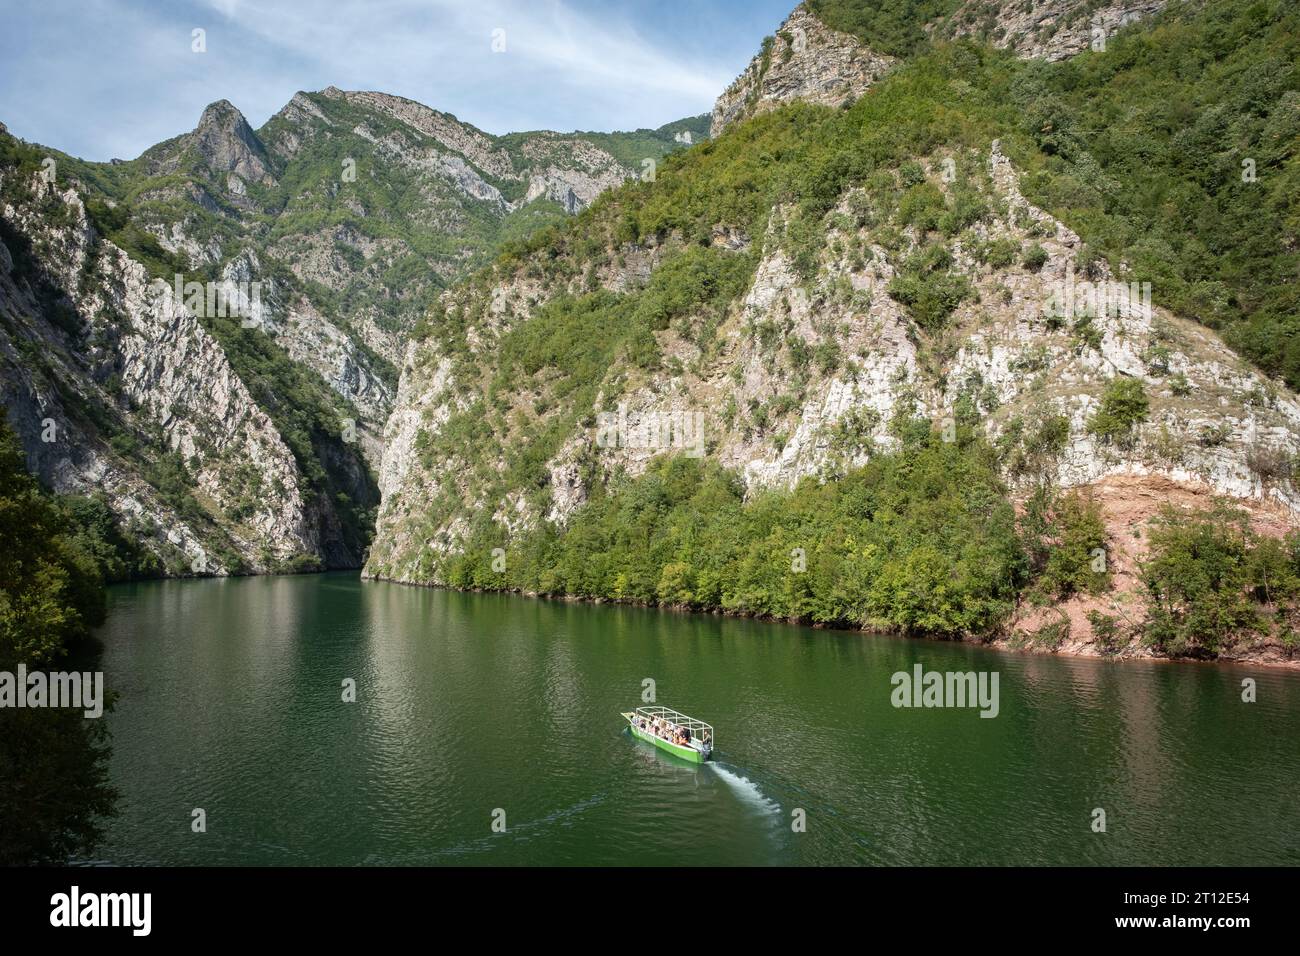 A tourist tour boat on the water at Lake Komani, Albania Stock Photo